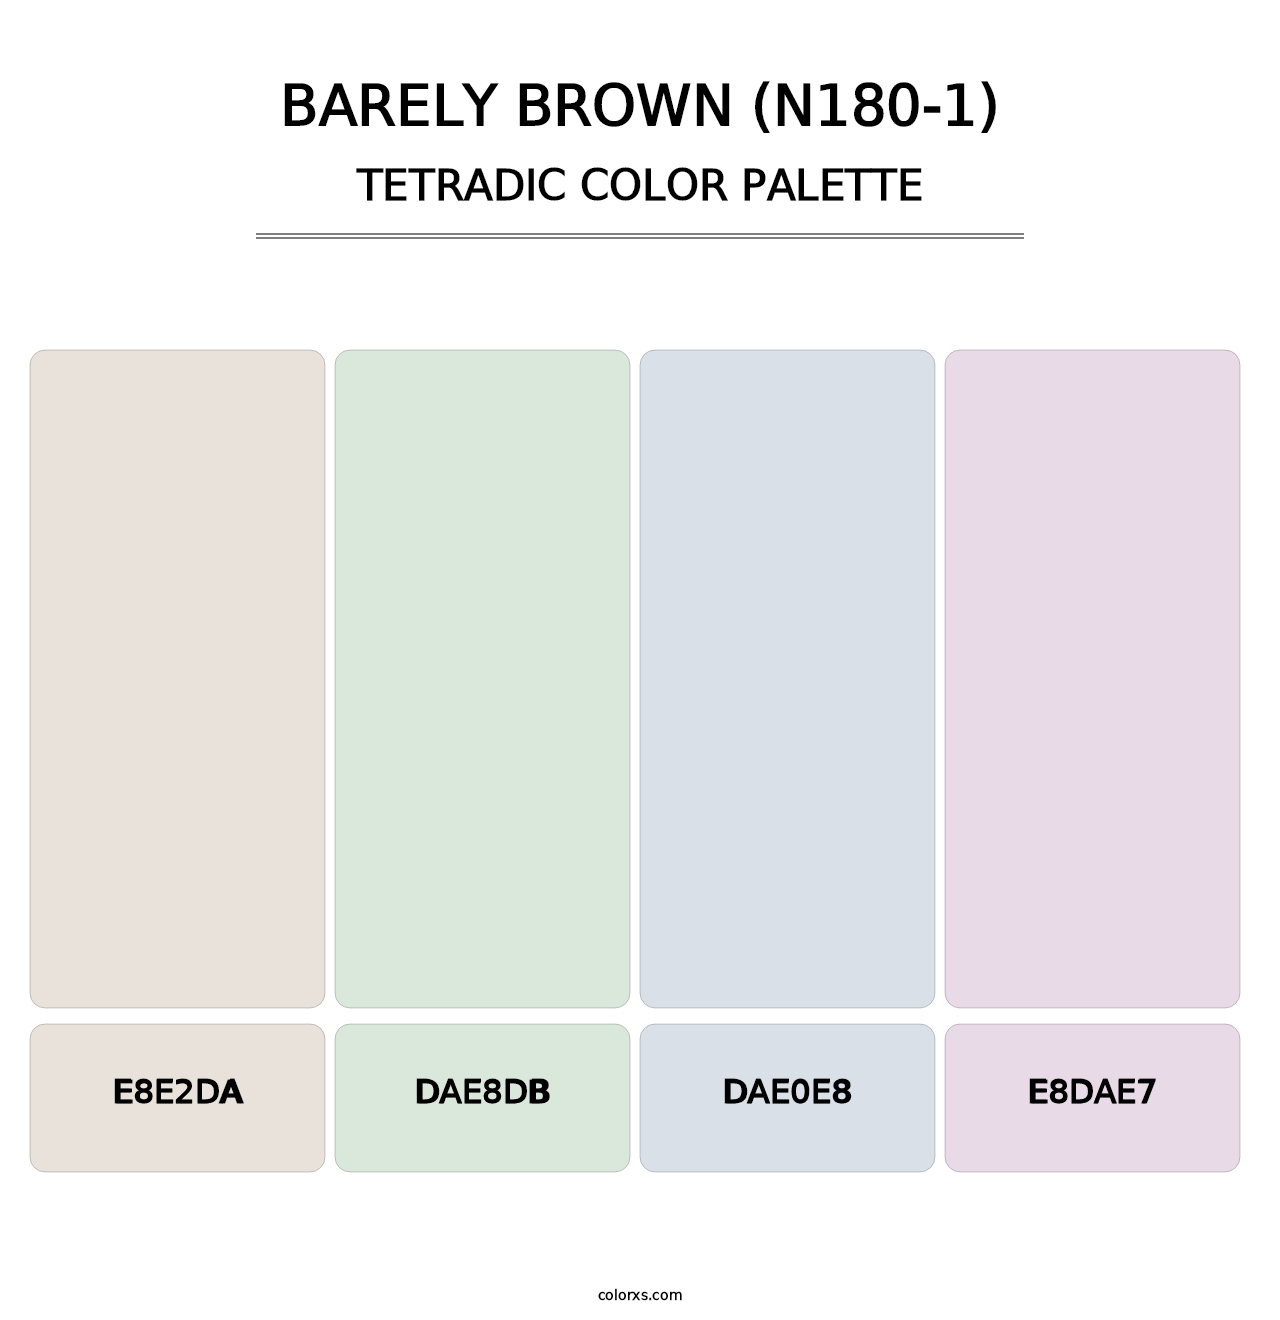 Barely Brown (N180-1) - Tetradic Color Palette